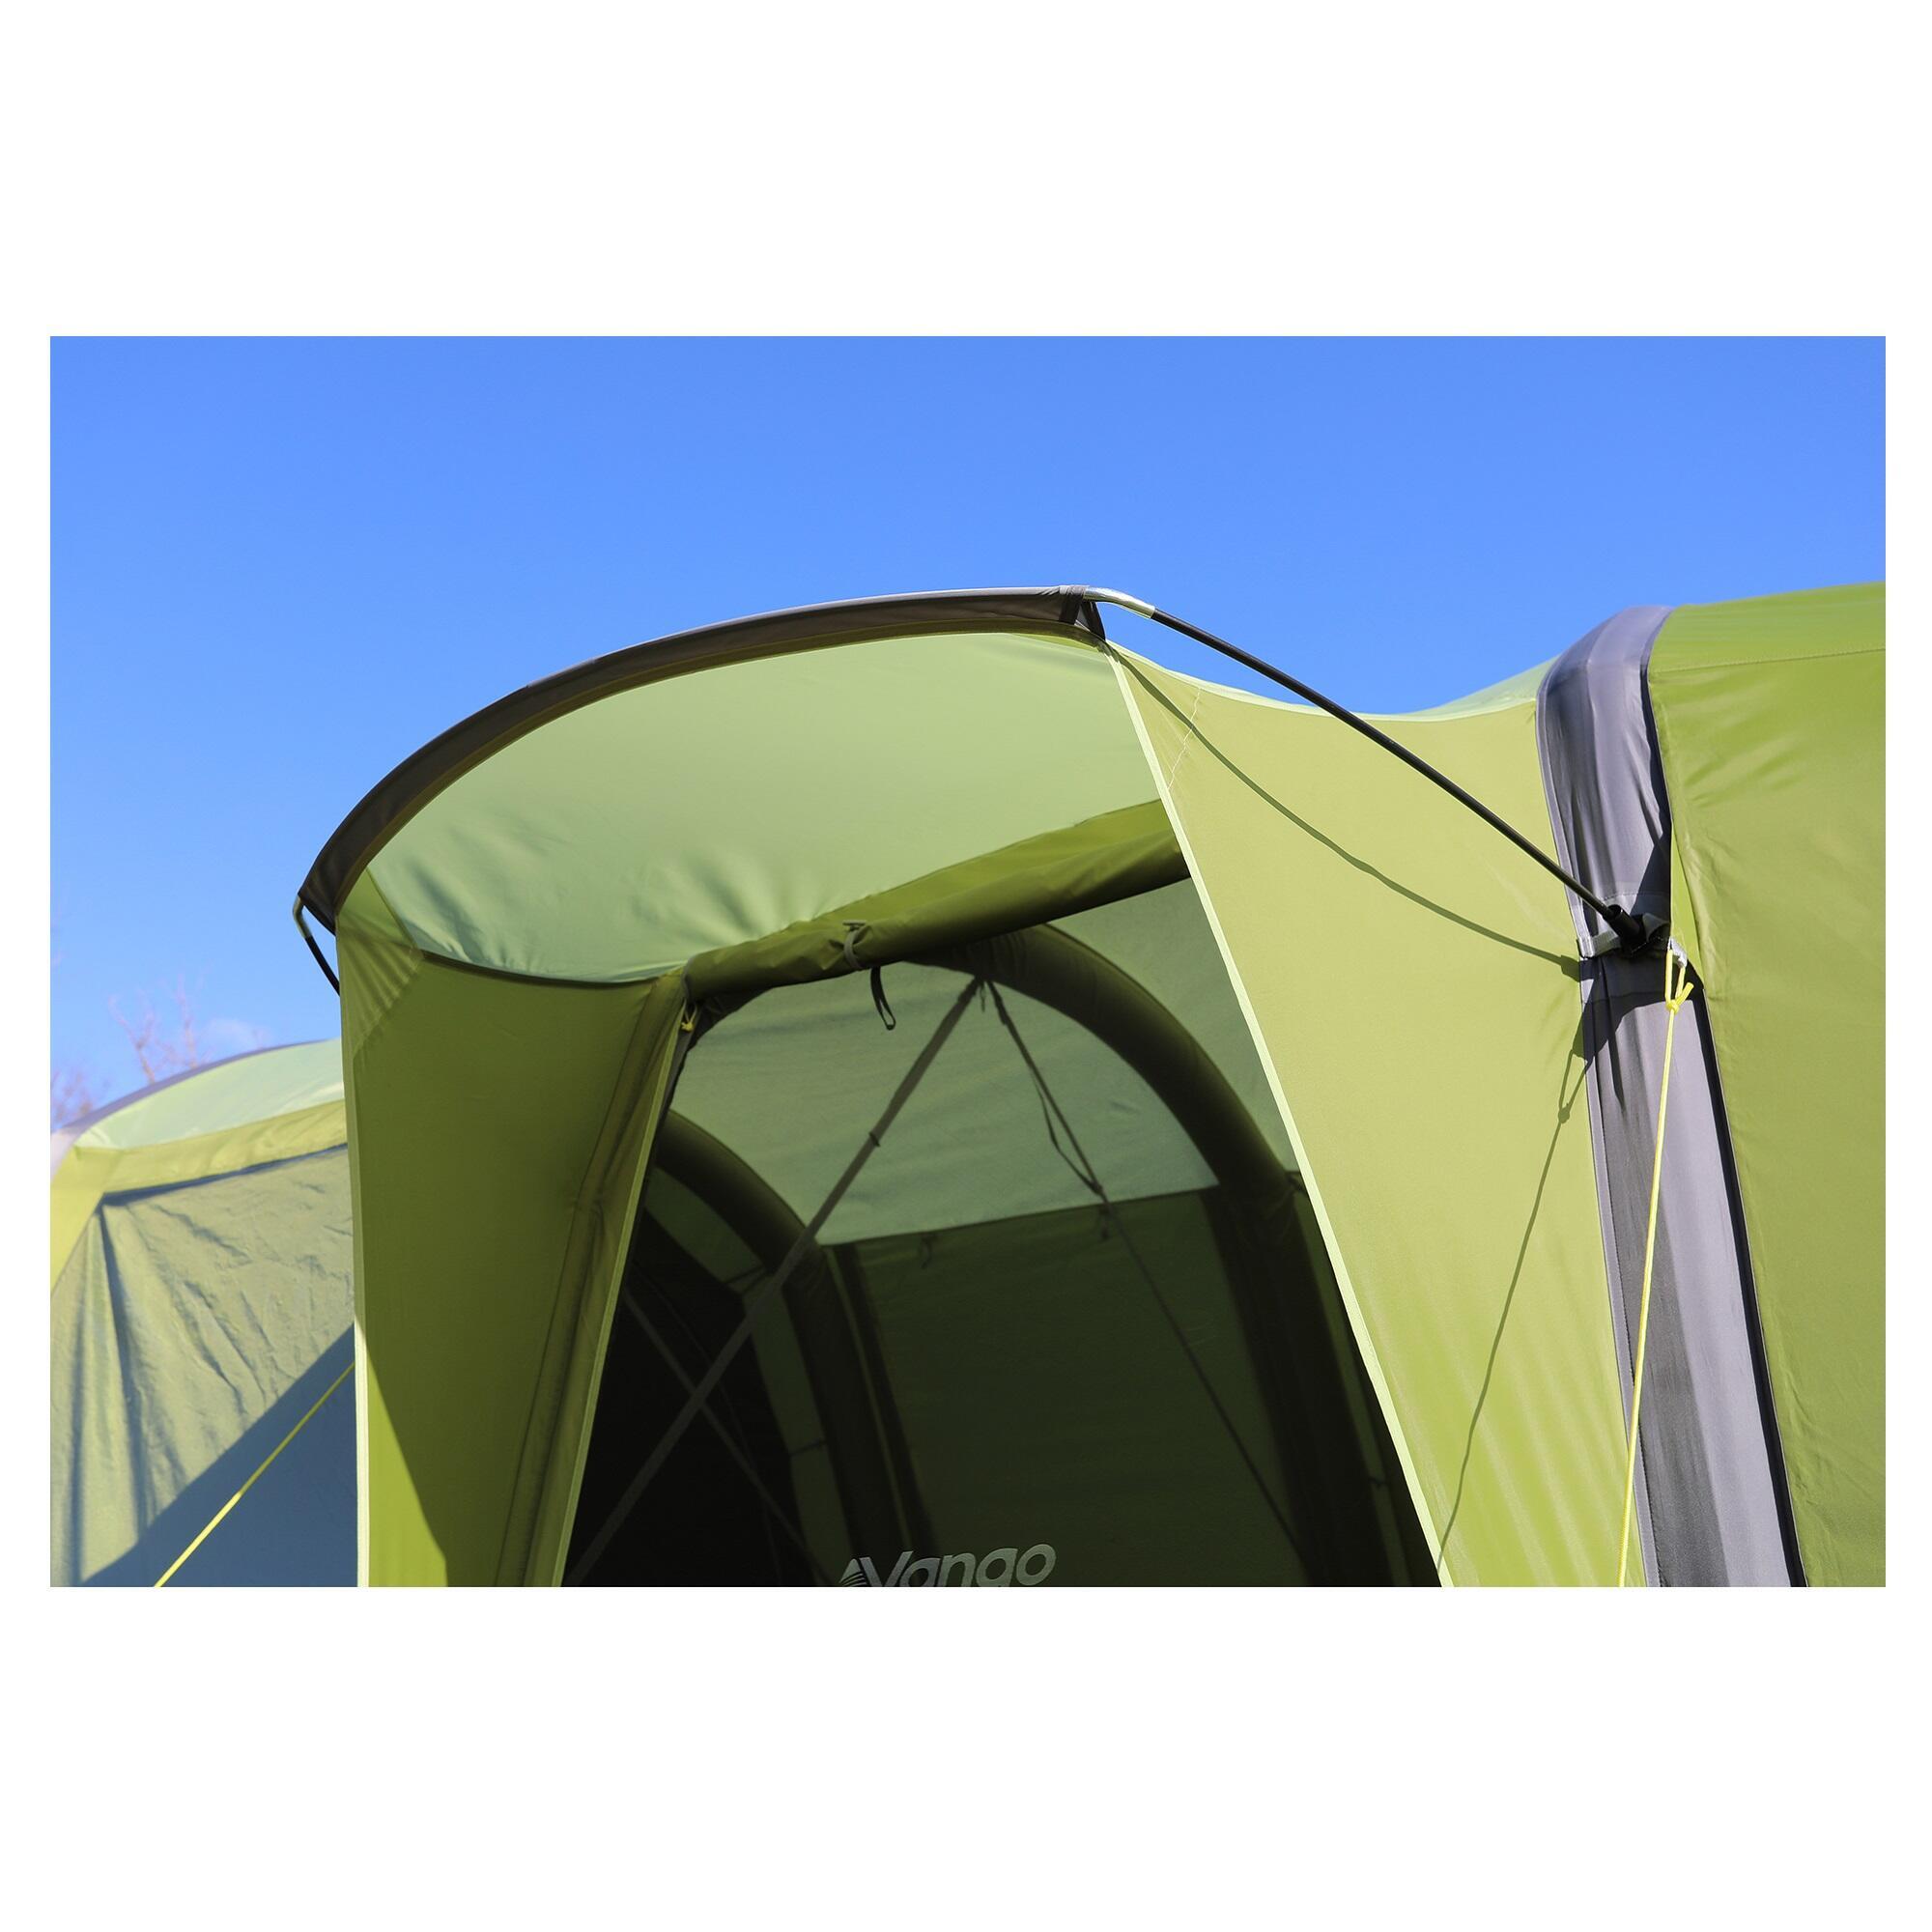 Refurbished Marino 850 XL AirBeam 8-man inflatable tent - B Grade 5/7